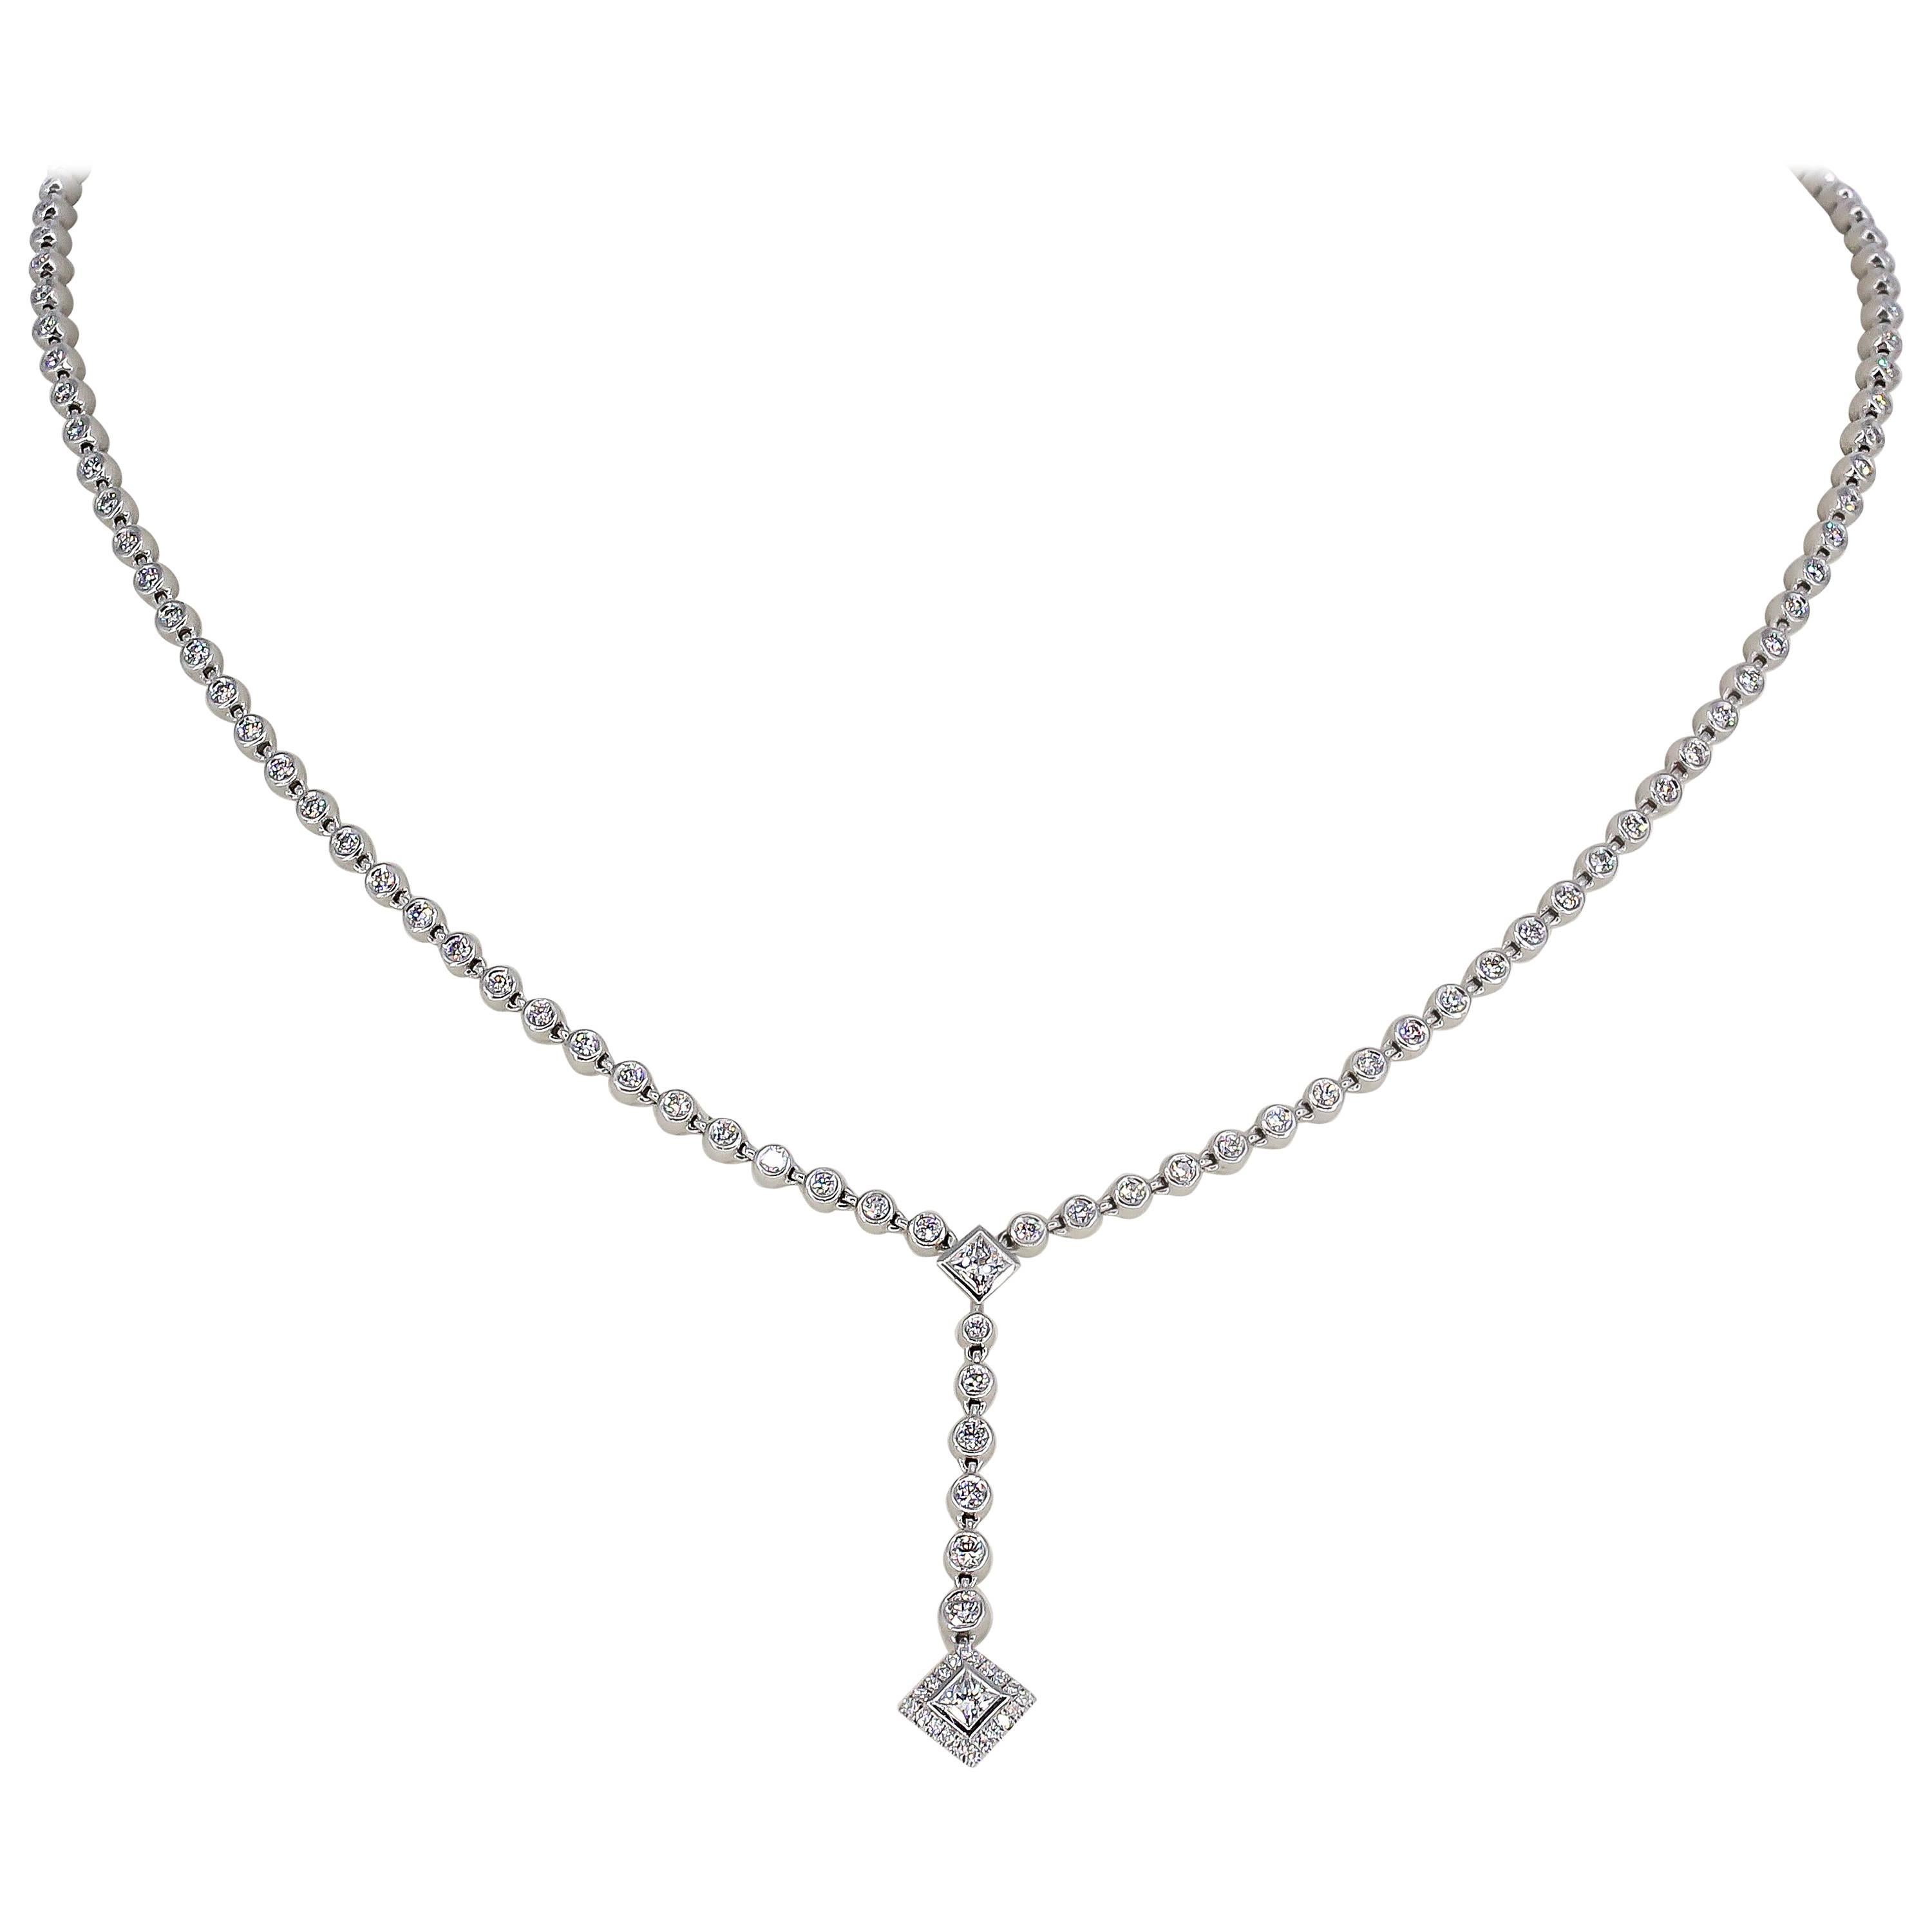 Tiffany & Co. Diamond and Platinum Necklace